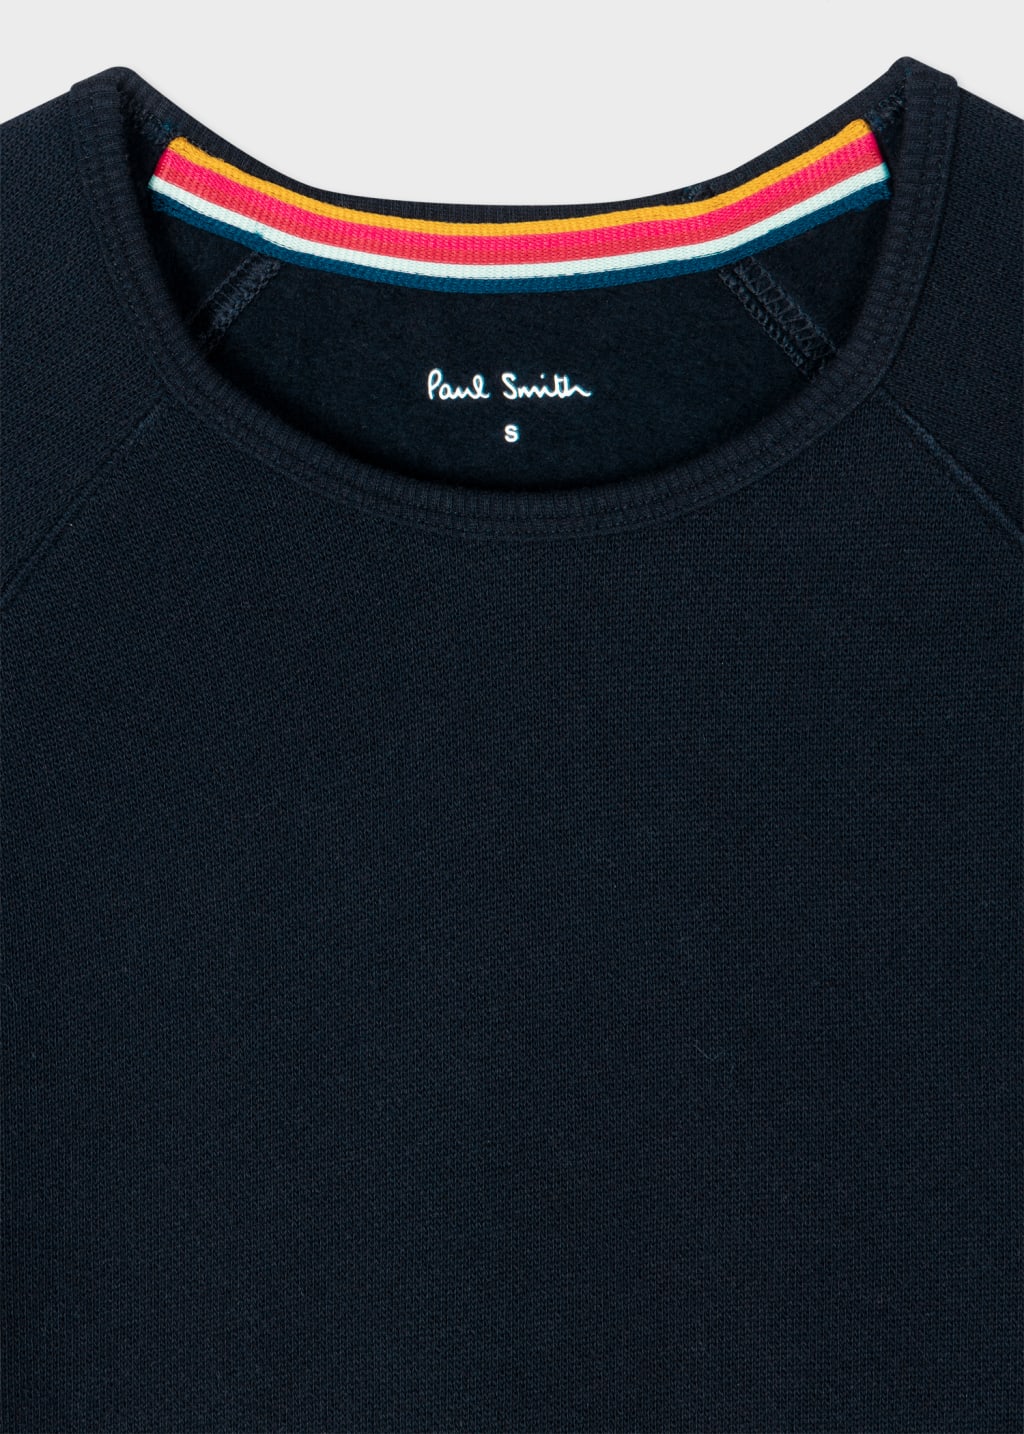 Detail View - Women's Navy Lounge Sweatshirt With 'Swirl Stripe' Cuffs Paul Smith